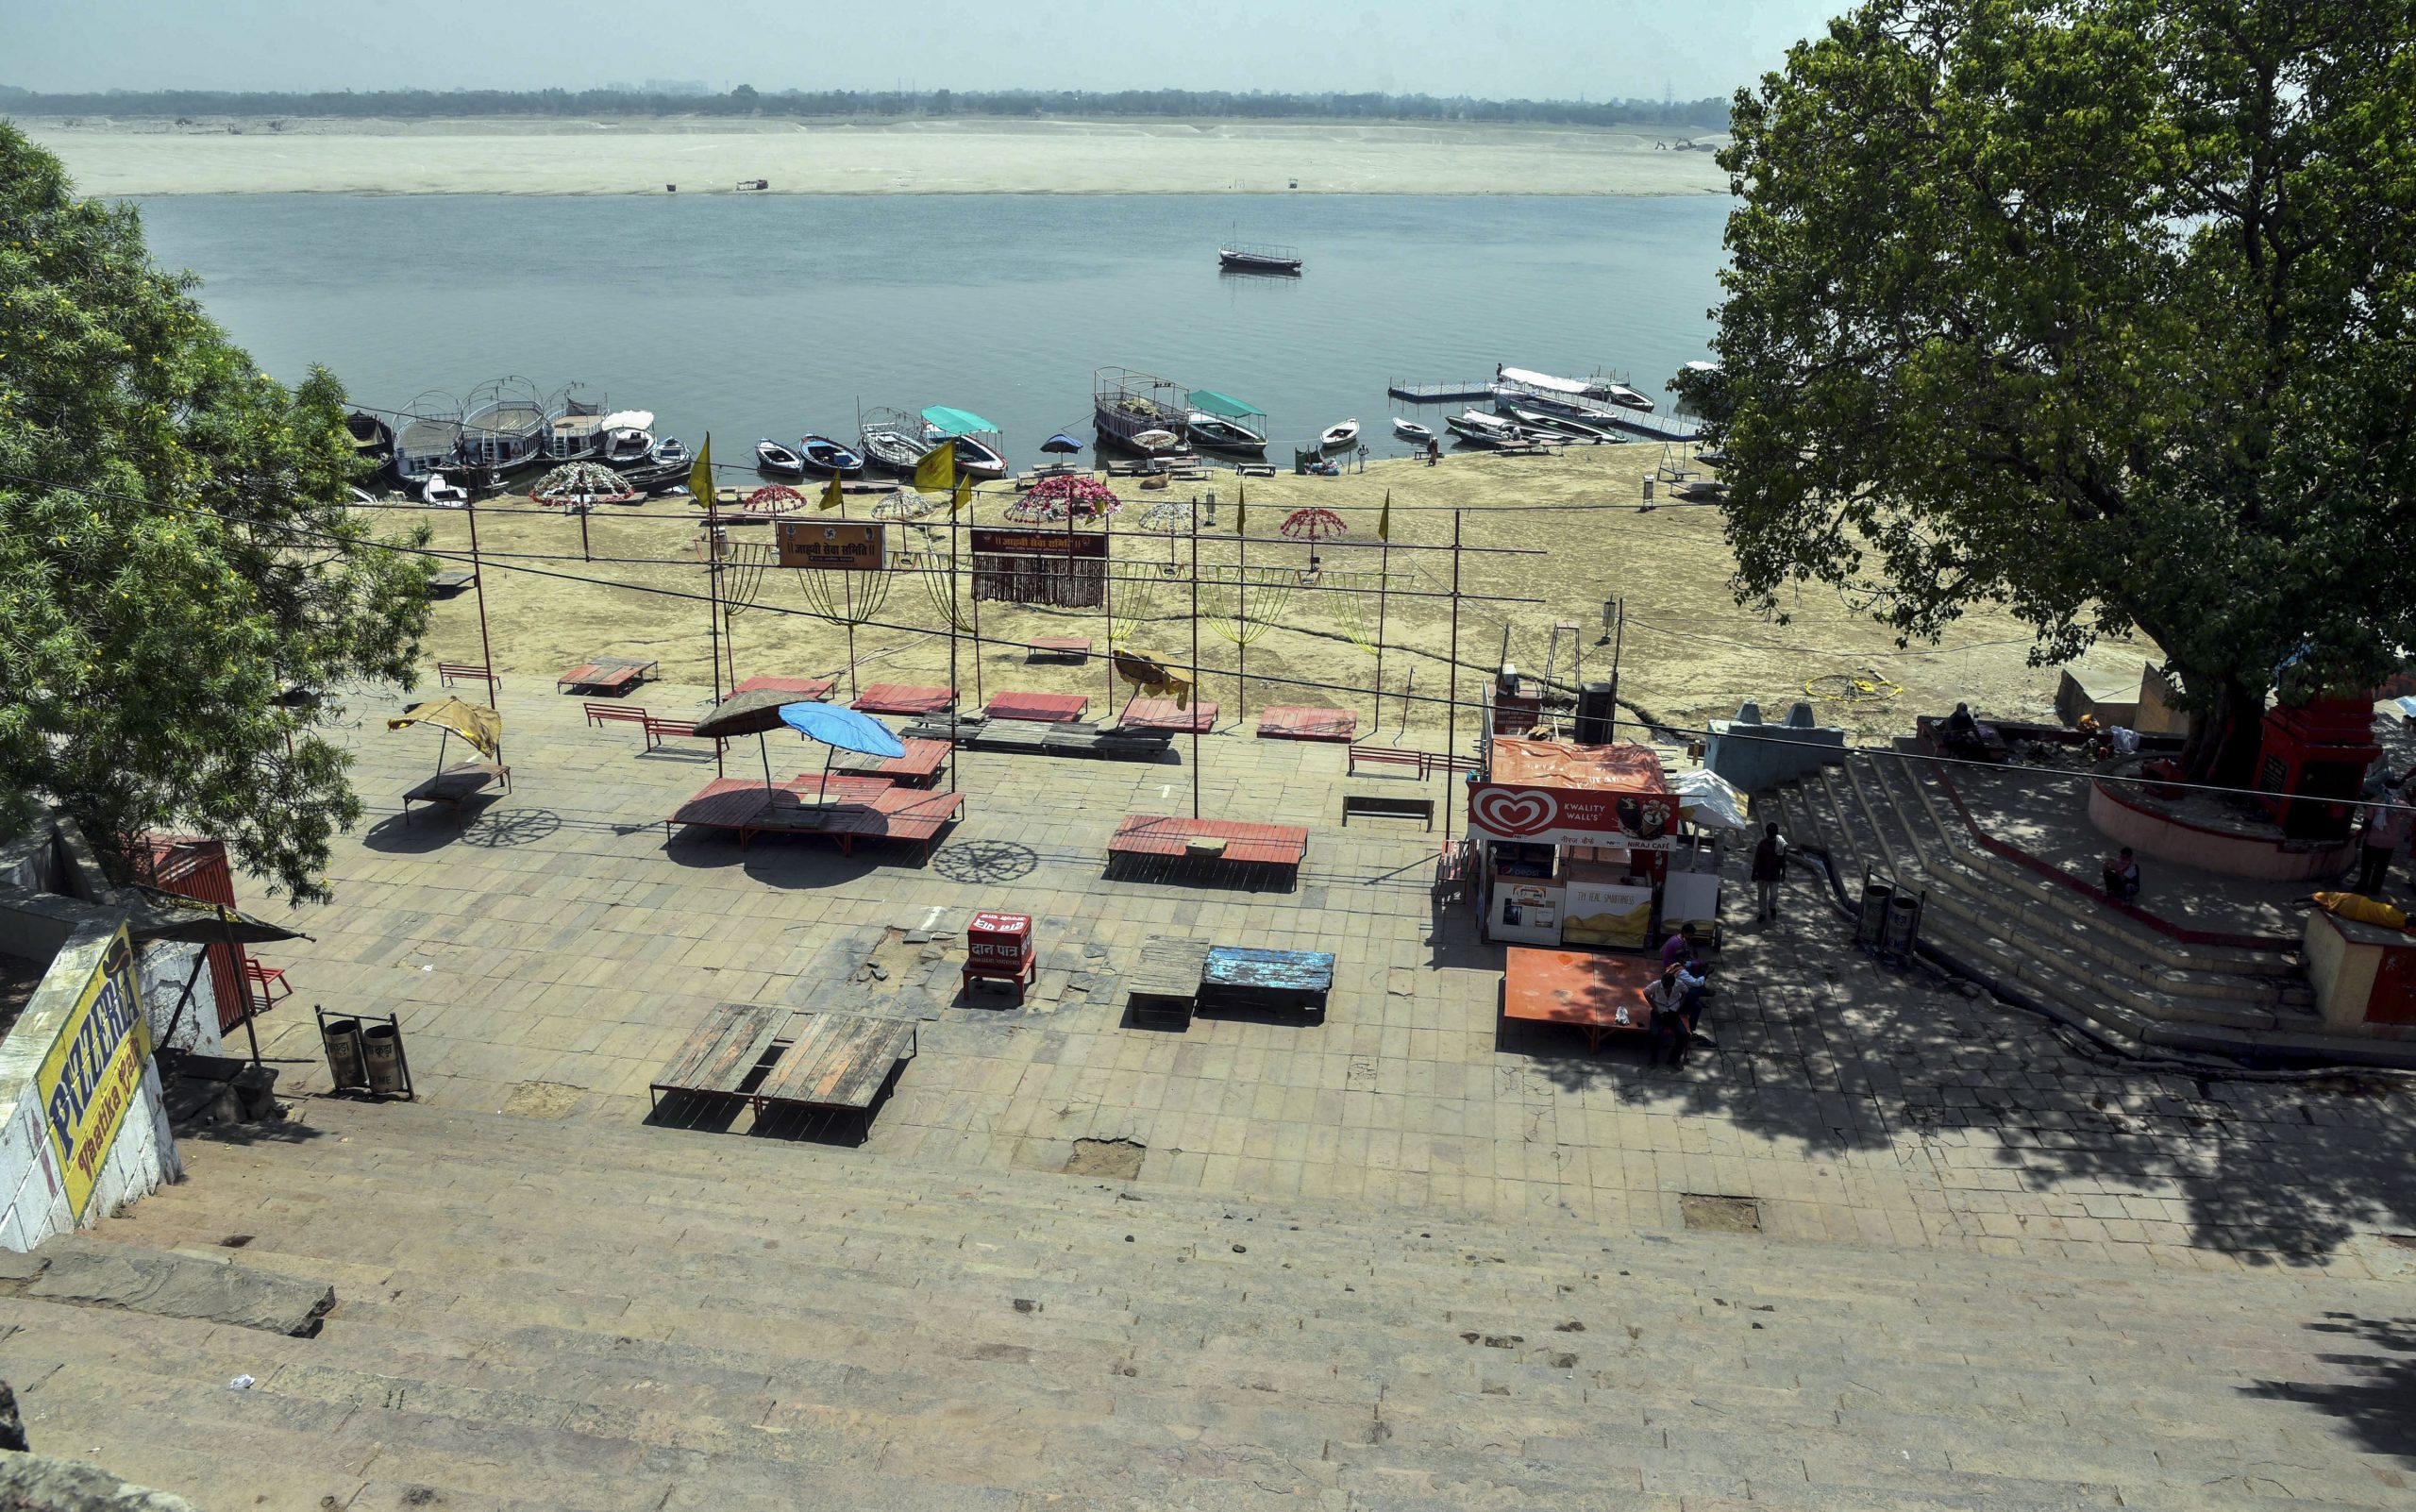 Bihar puts net across Ganga to catch bodies of suspected COVID victims